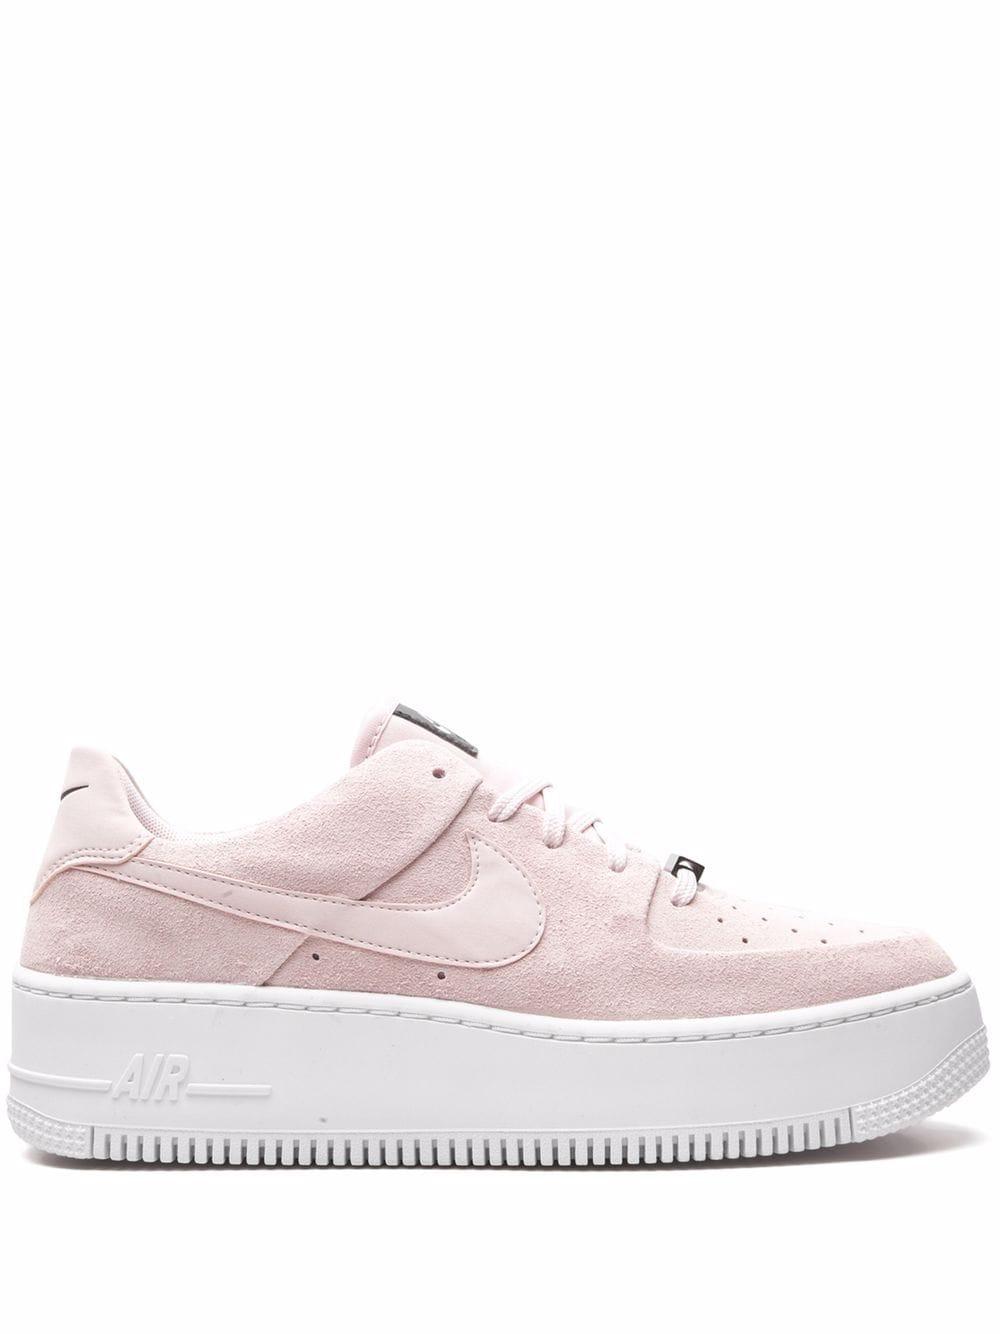 Nike Air Force 1 Sage Low Sneakers in Pink | Lyst